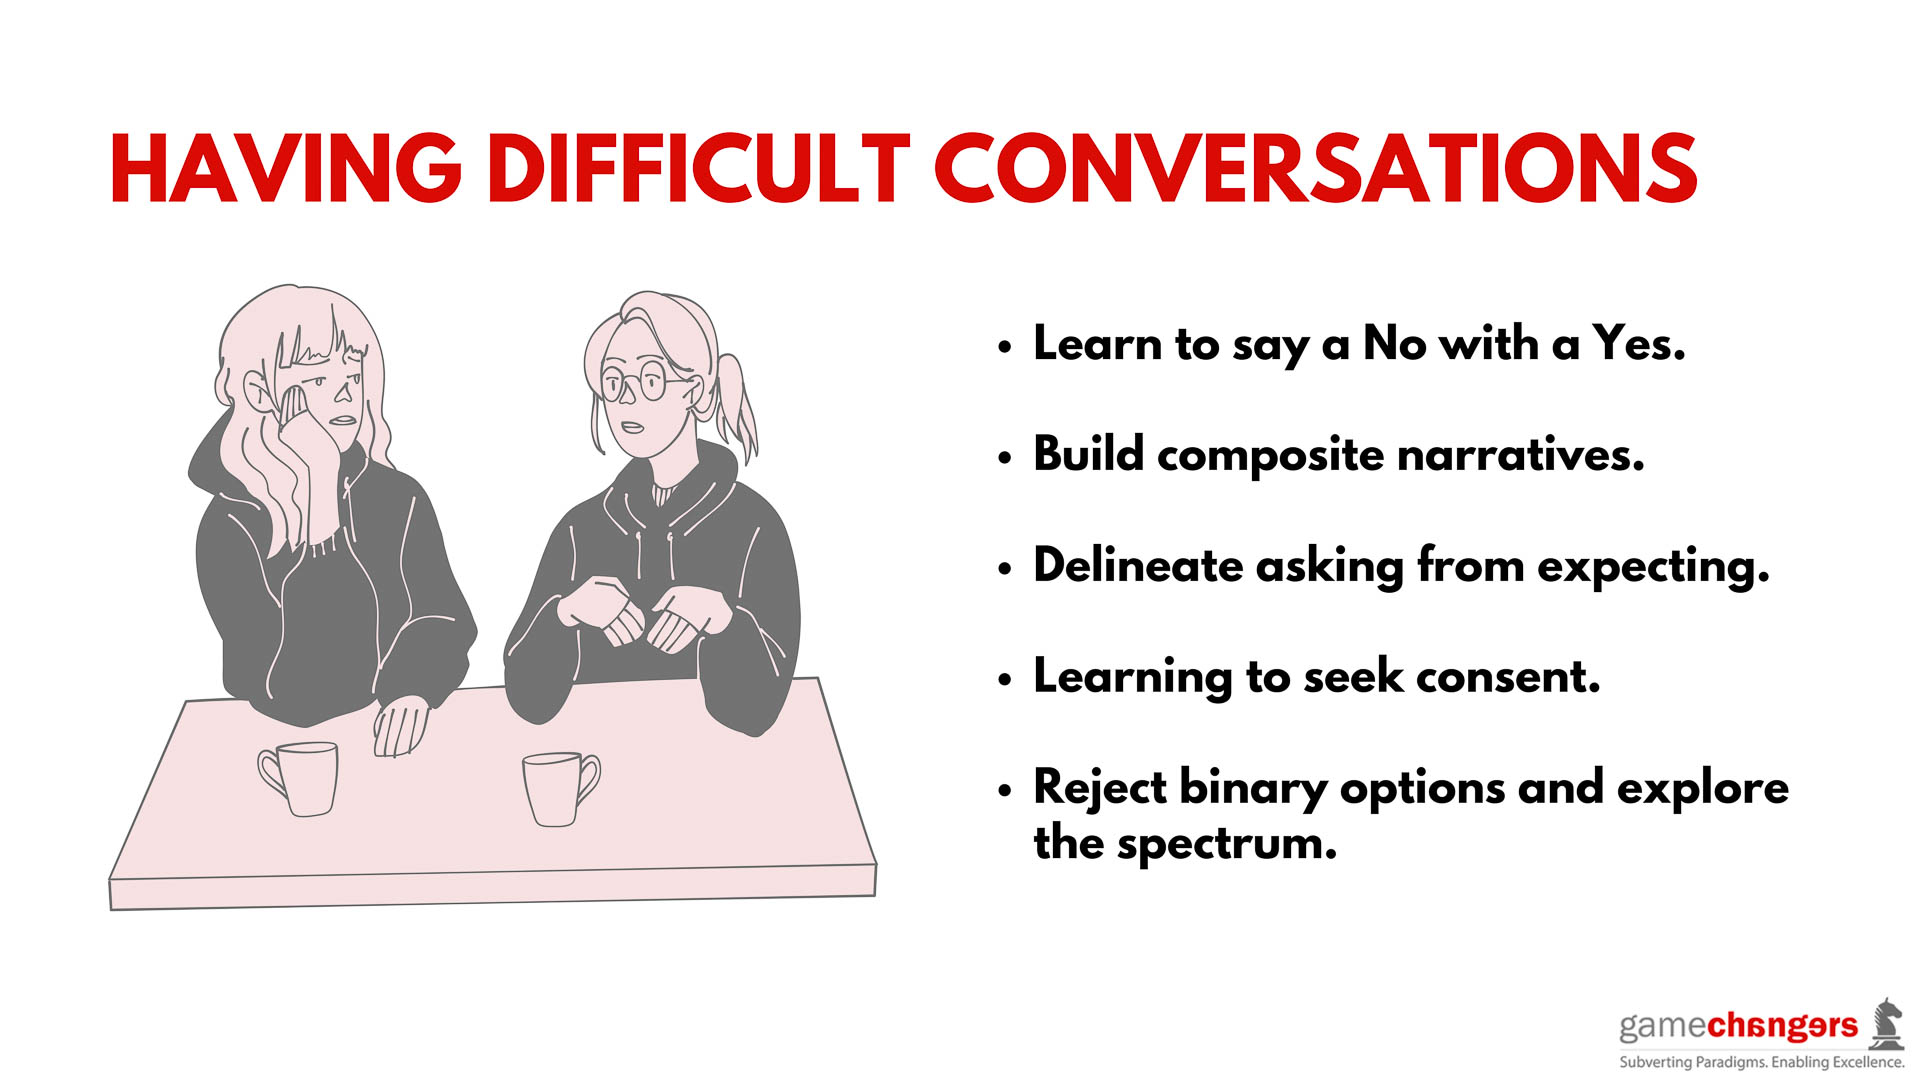 “eil-difficult-conversations-8”